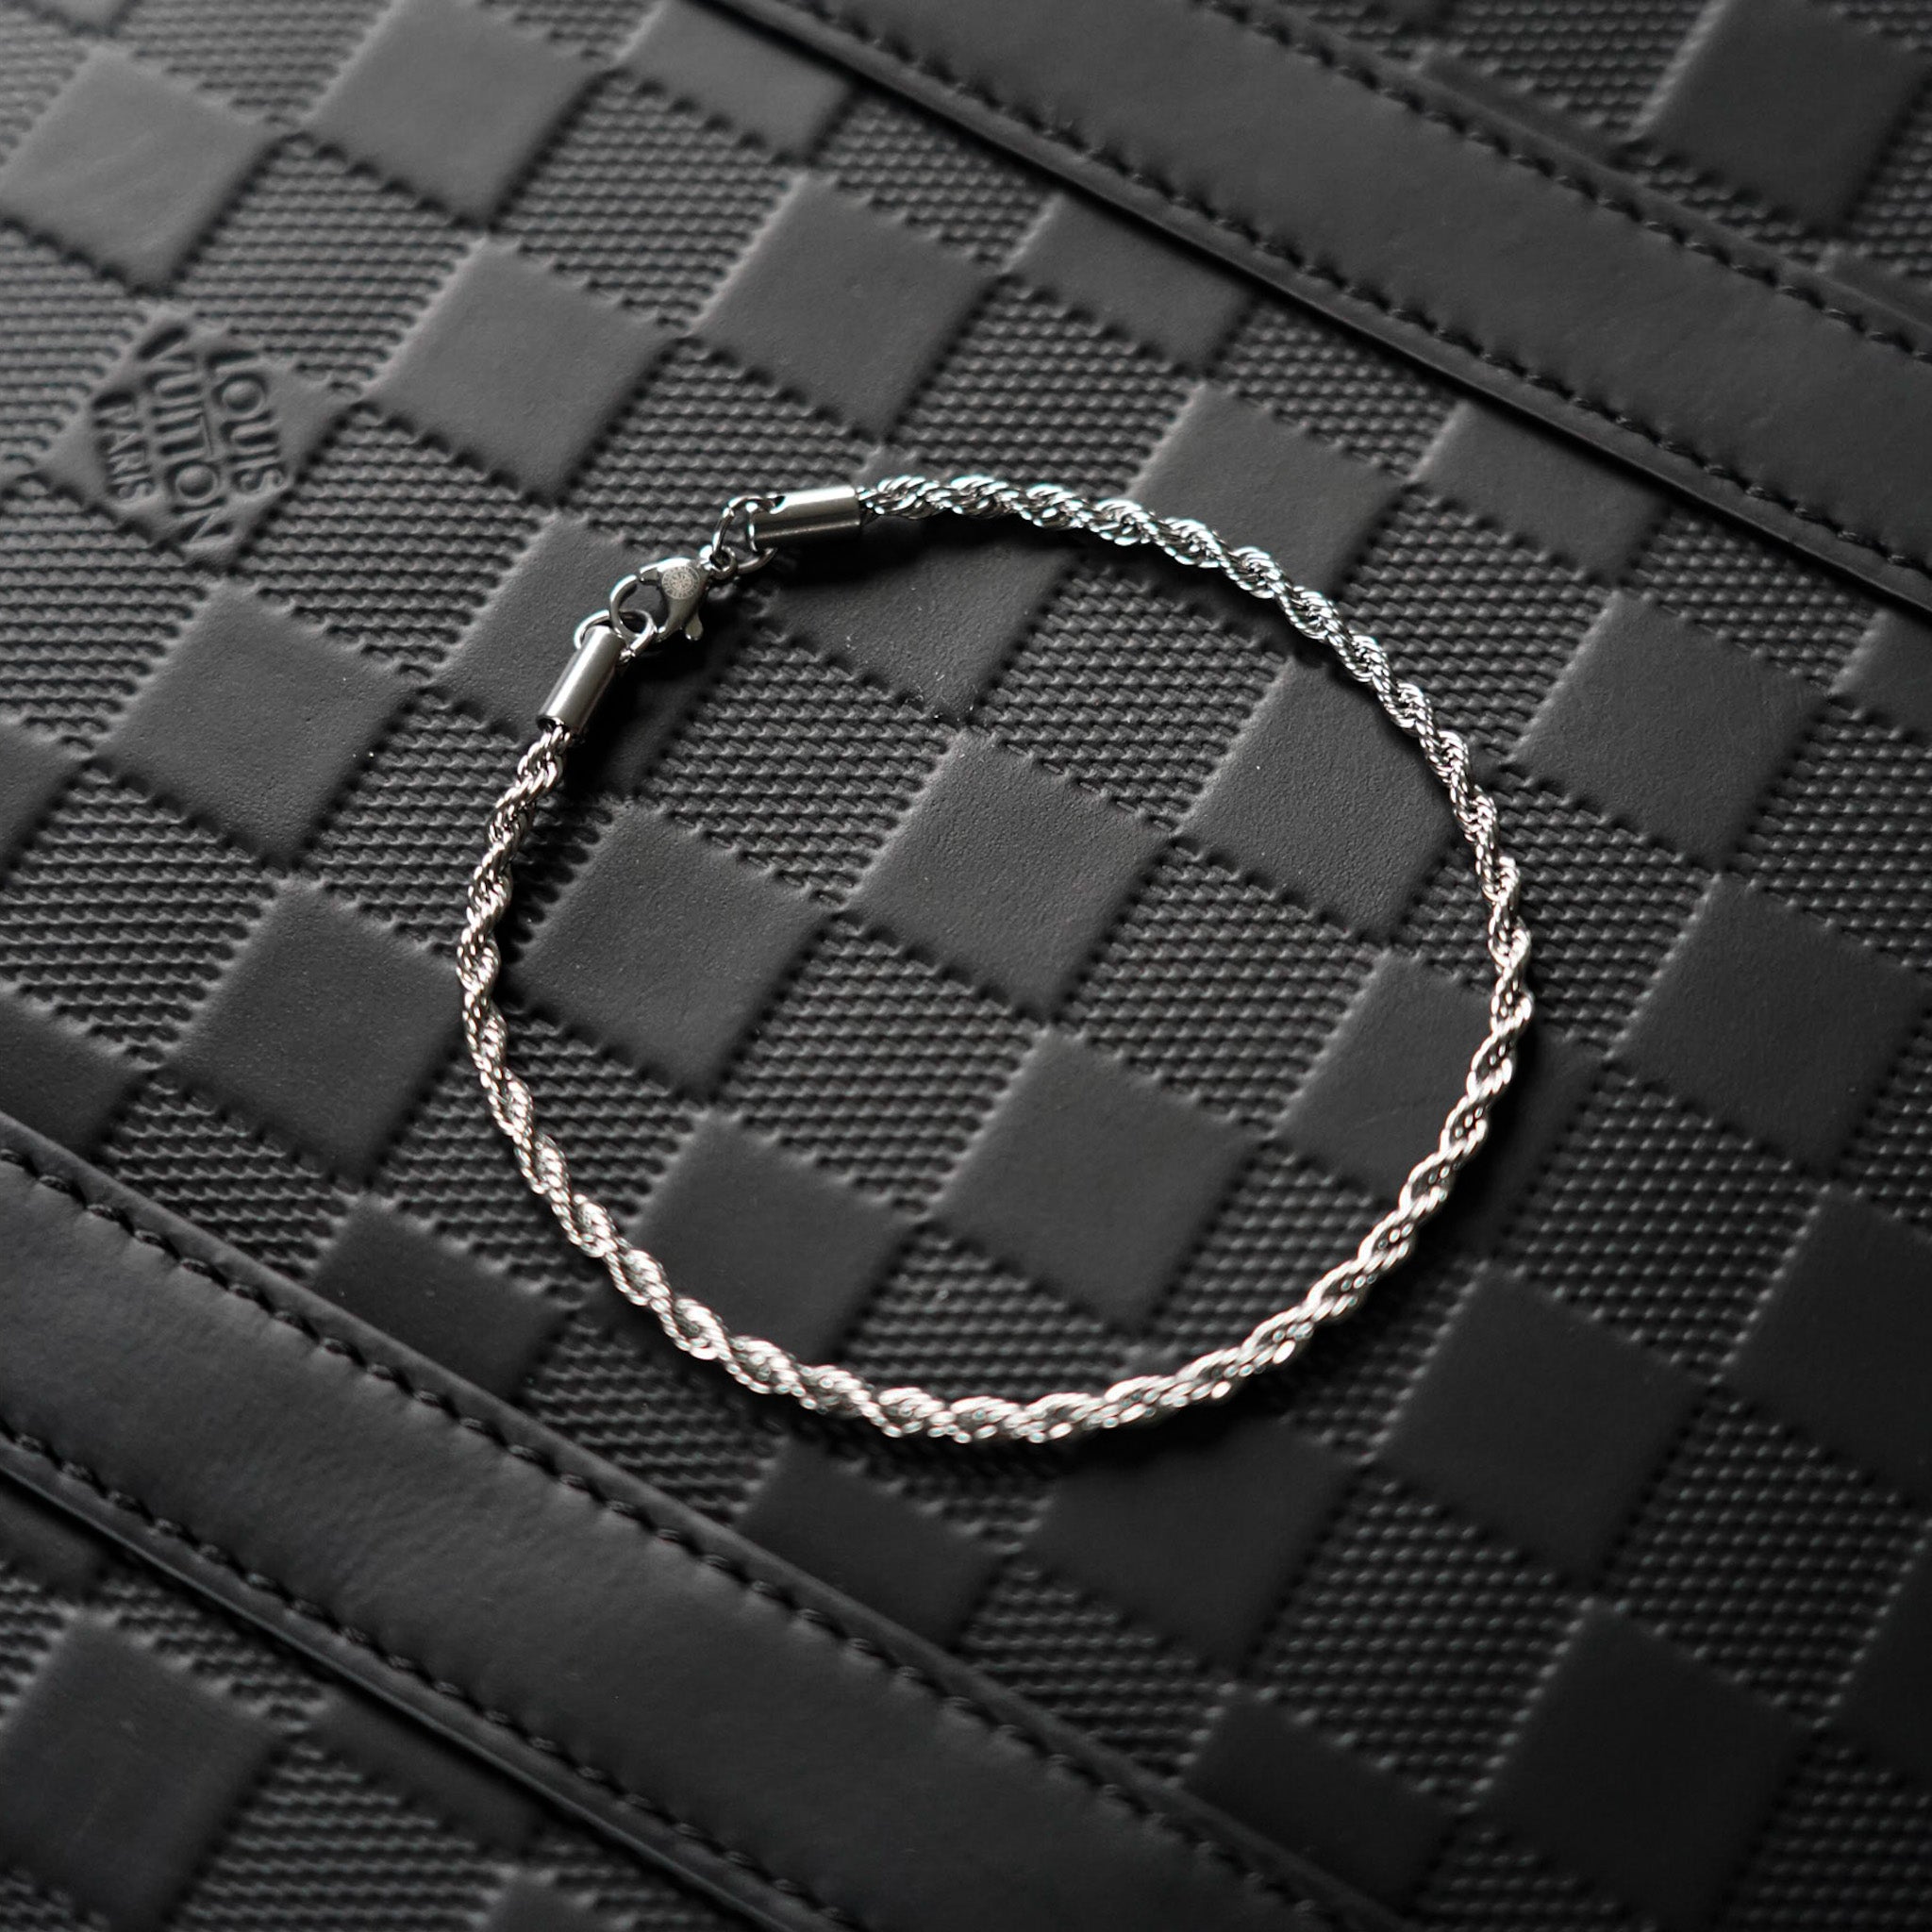 Rope bracelet - Silver-toned